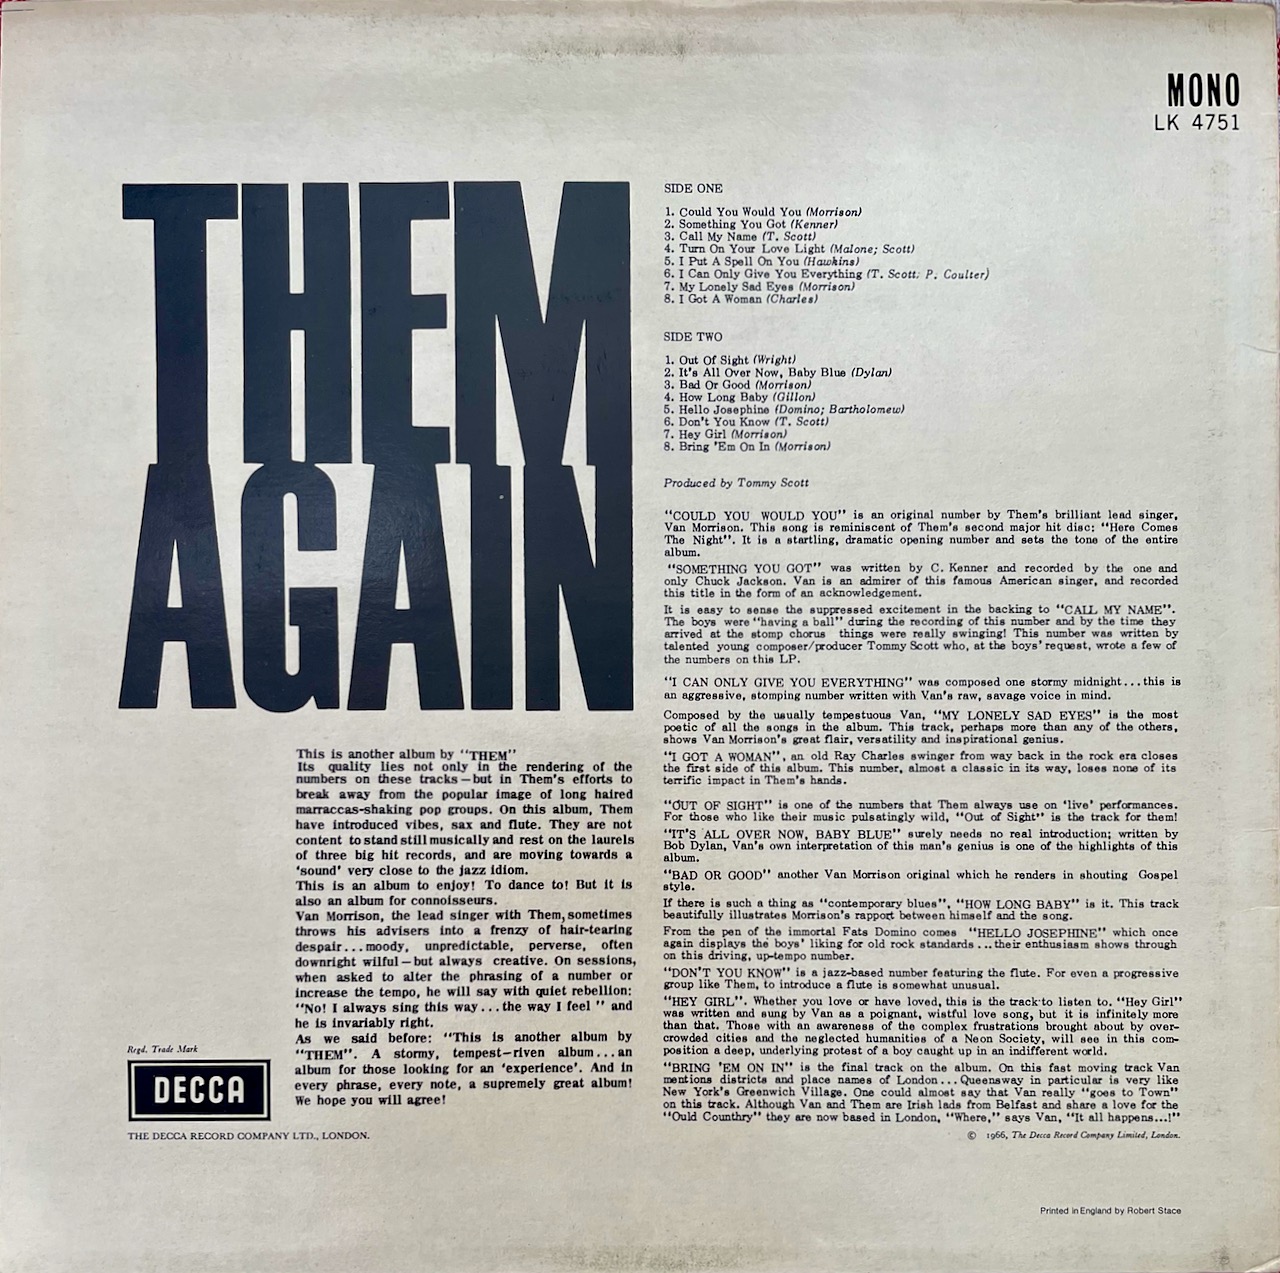 Use them again. Them again. Them - them again. Them 1966. Them "them again (LP)".